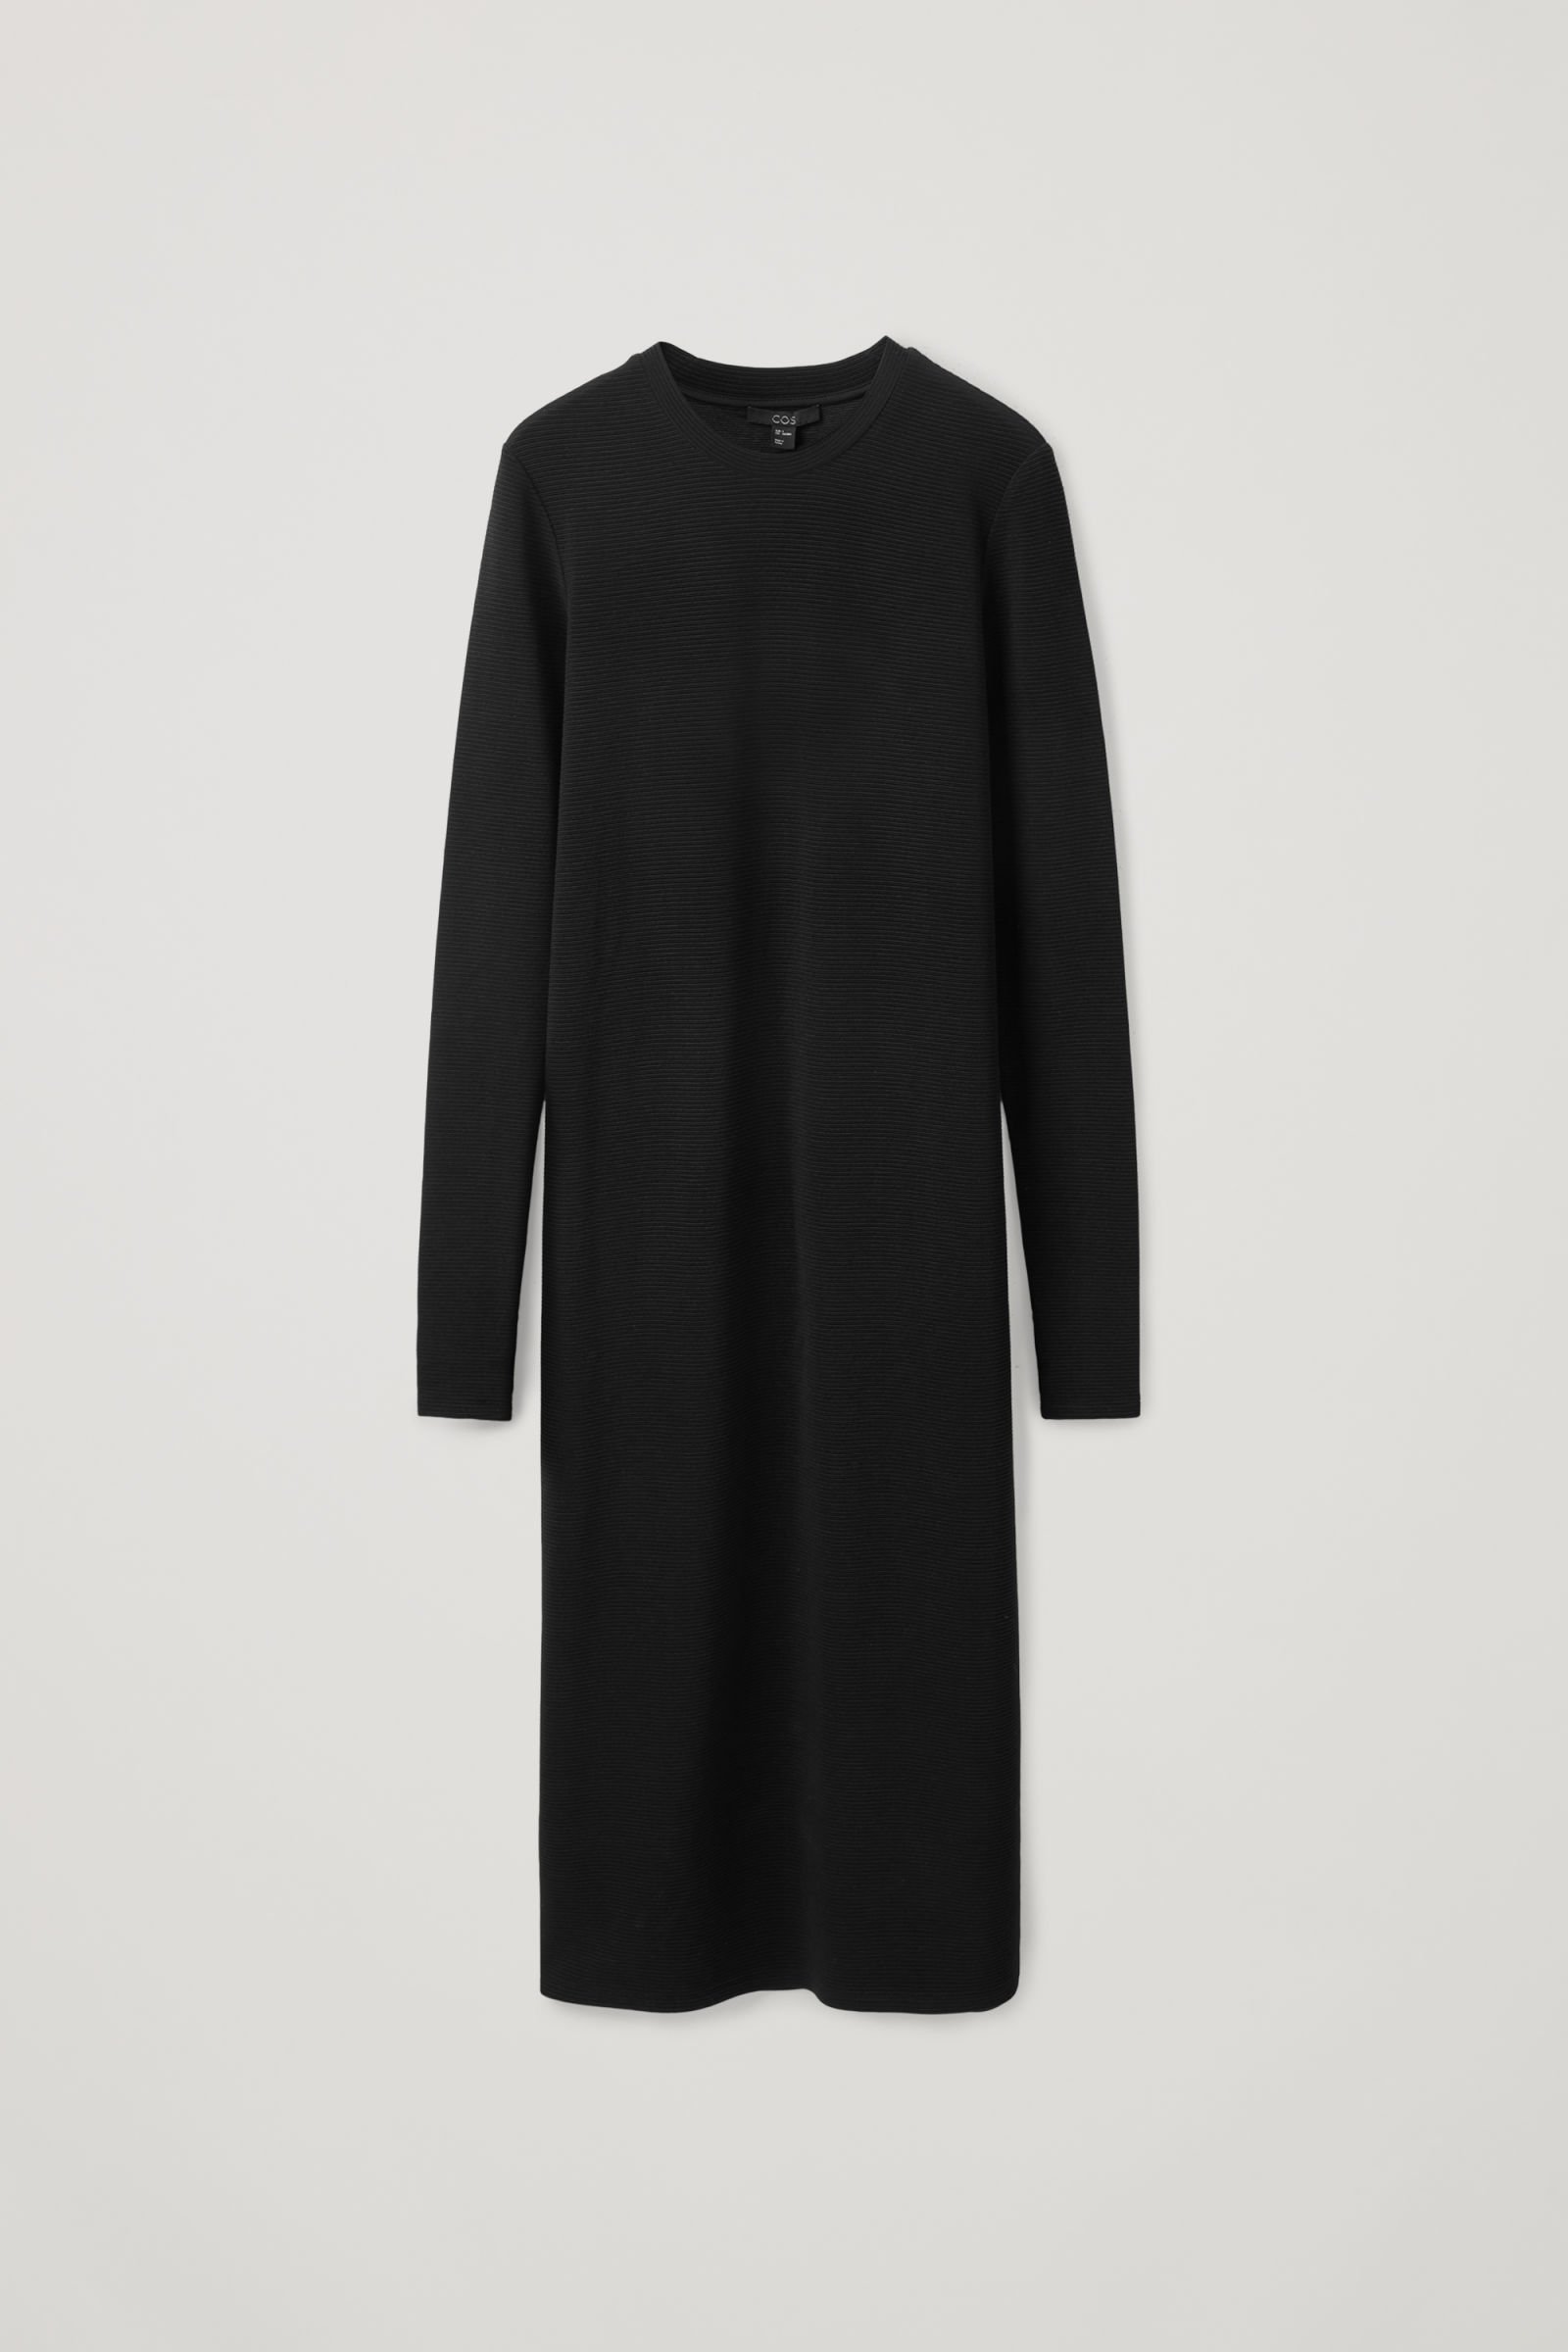 COS Ribbed Long-Sleeve Midi Dress in Black | Endource